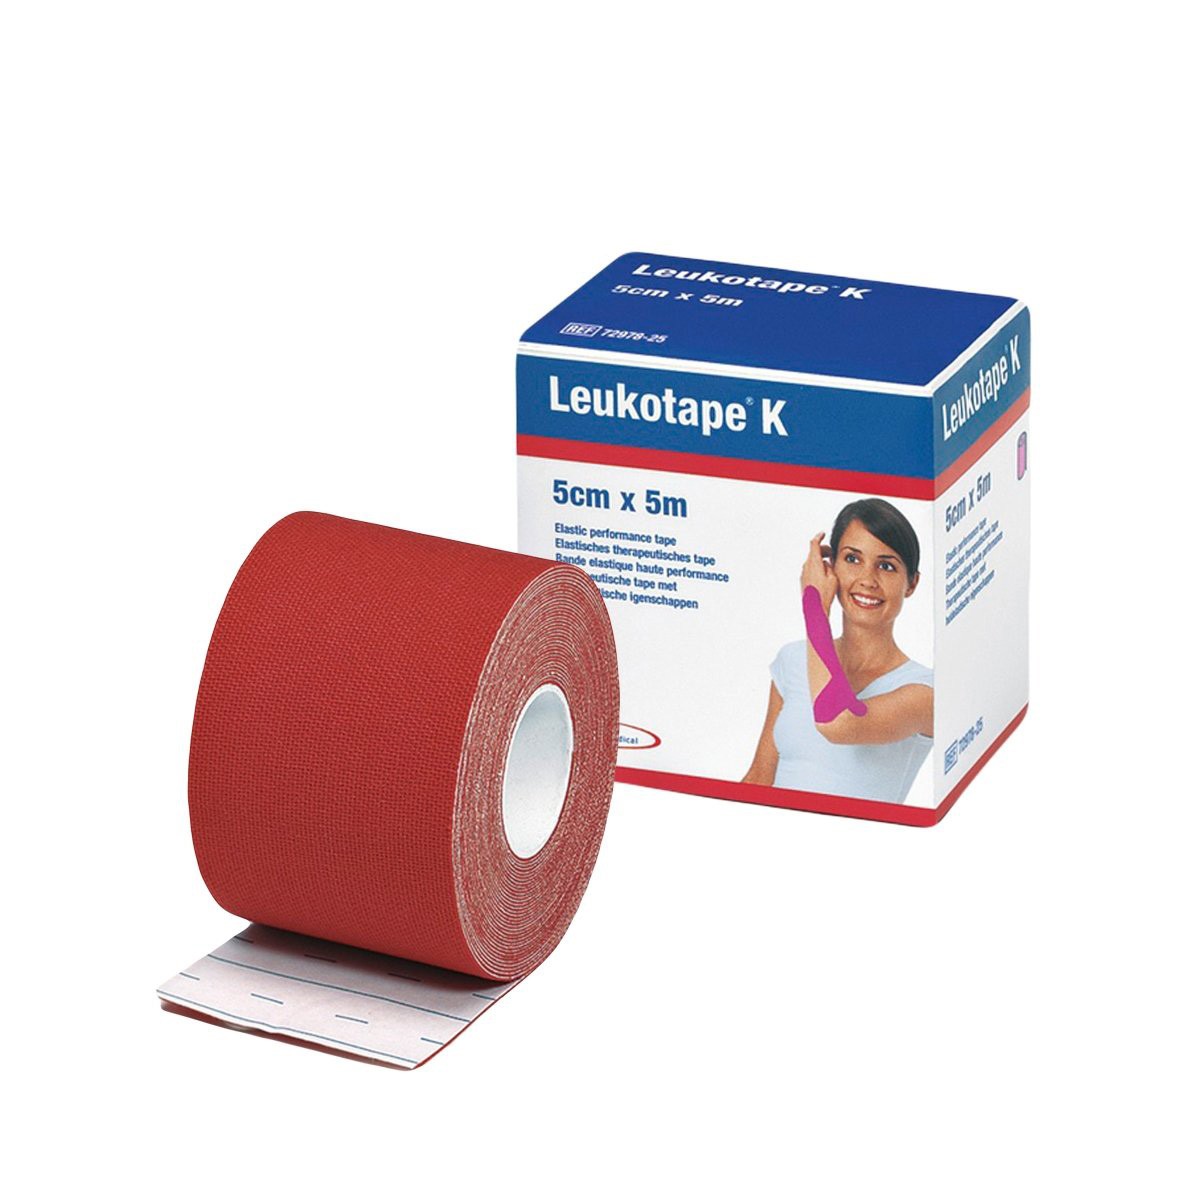 Foto do produto Leukotape Adesivo Terapêutico Vermelha - BSN R$ 65,00